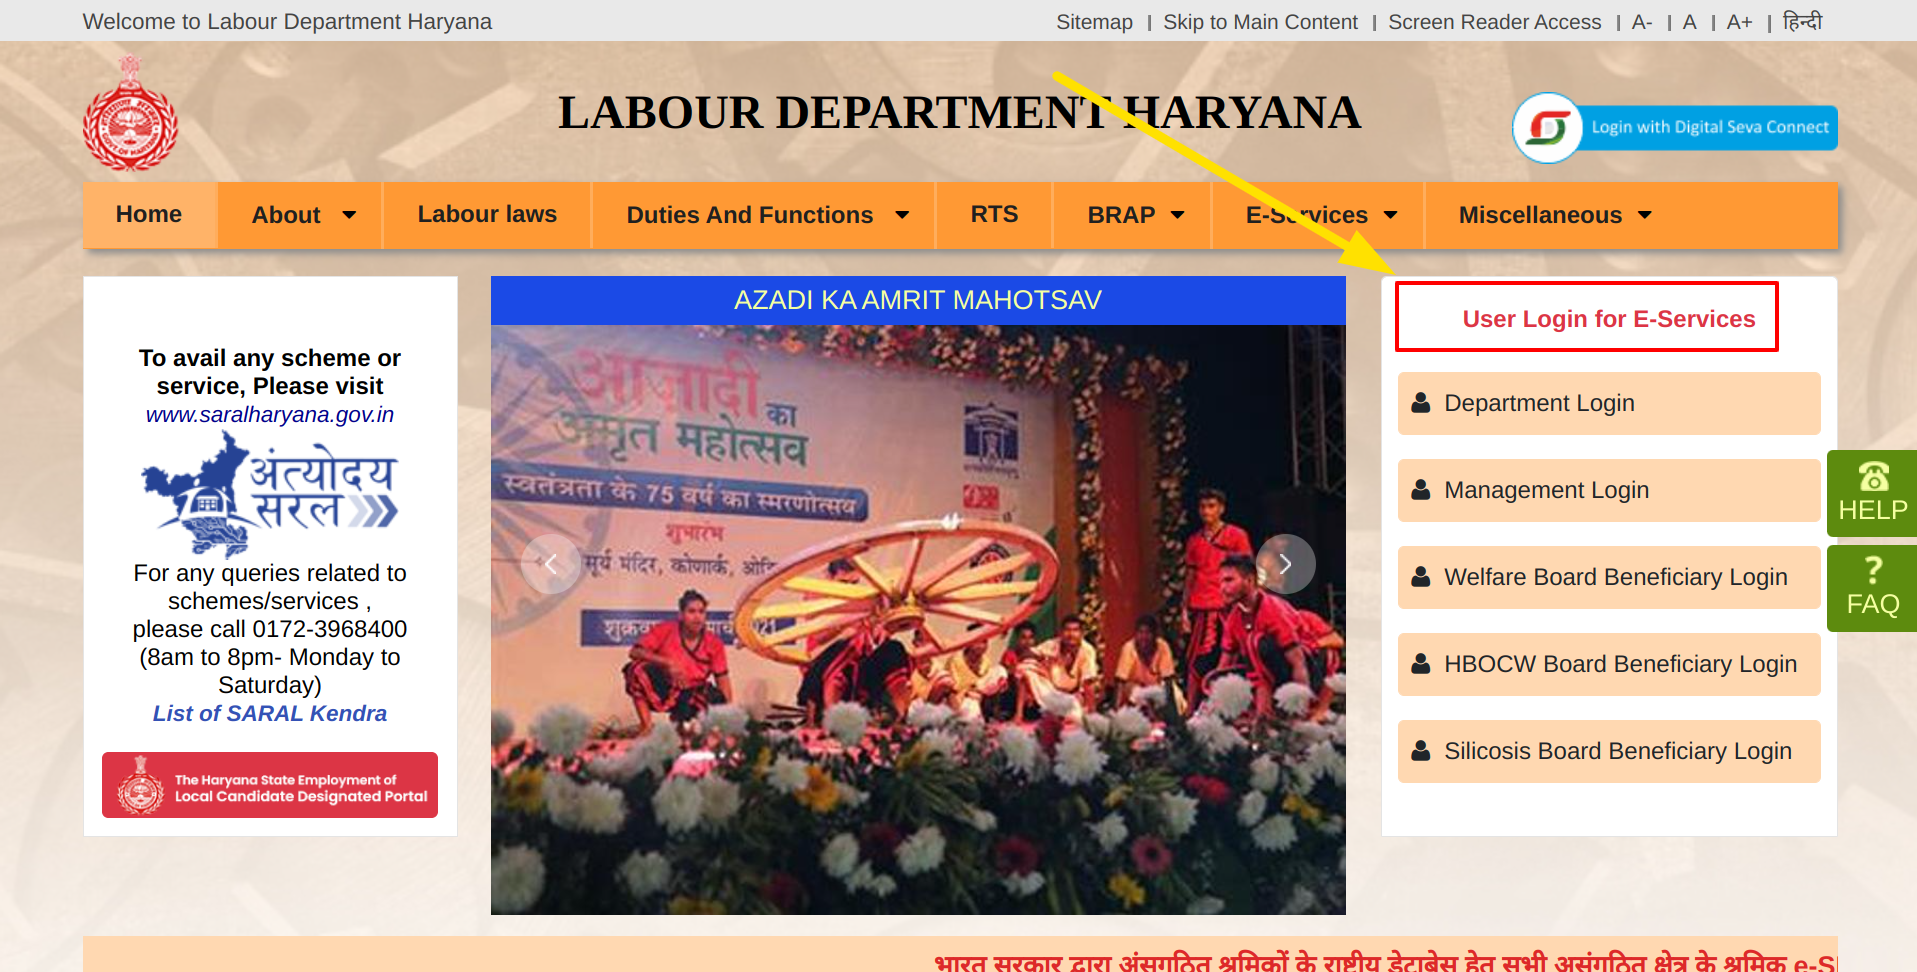 Hariyana labour department yojna